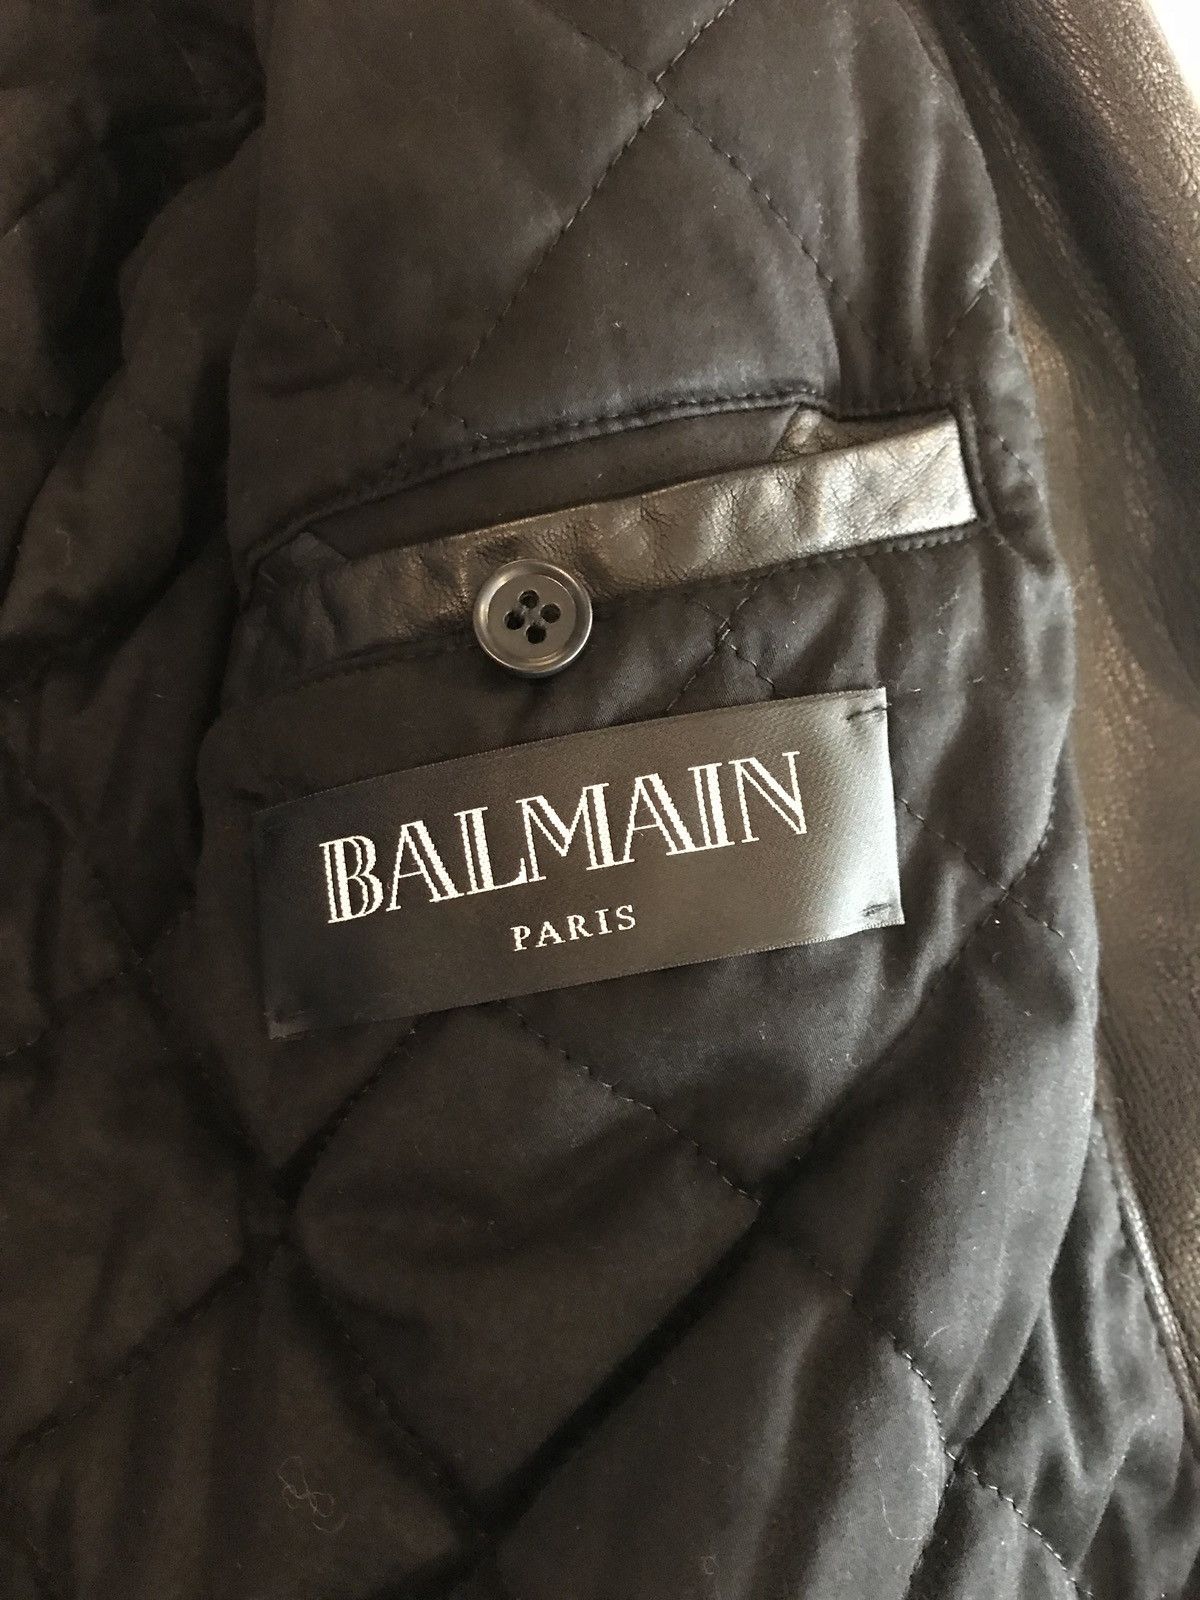 Balmain Balmain Leather Biker Jacket Size US XS / EU 42 / 0 - 3 Thumbnail